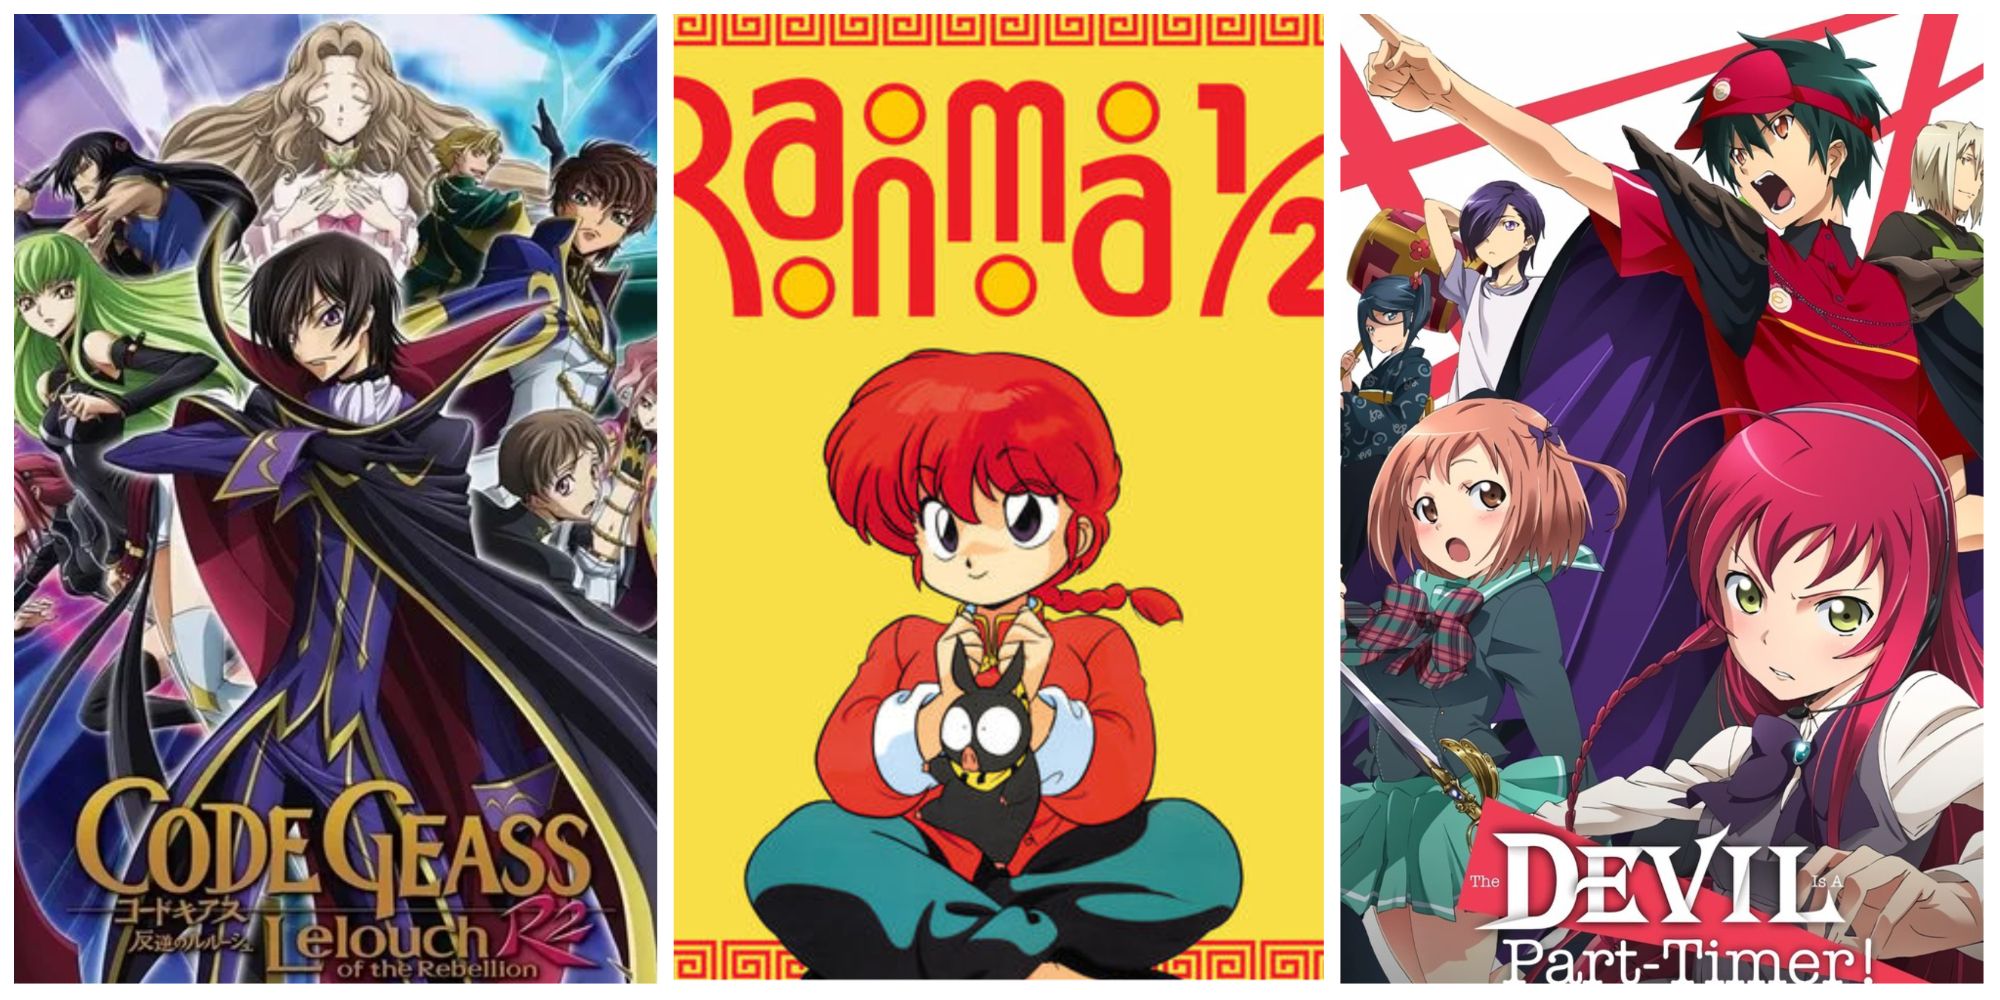 Top 5 Best Harem Anime - Spiel Anime